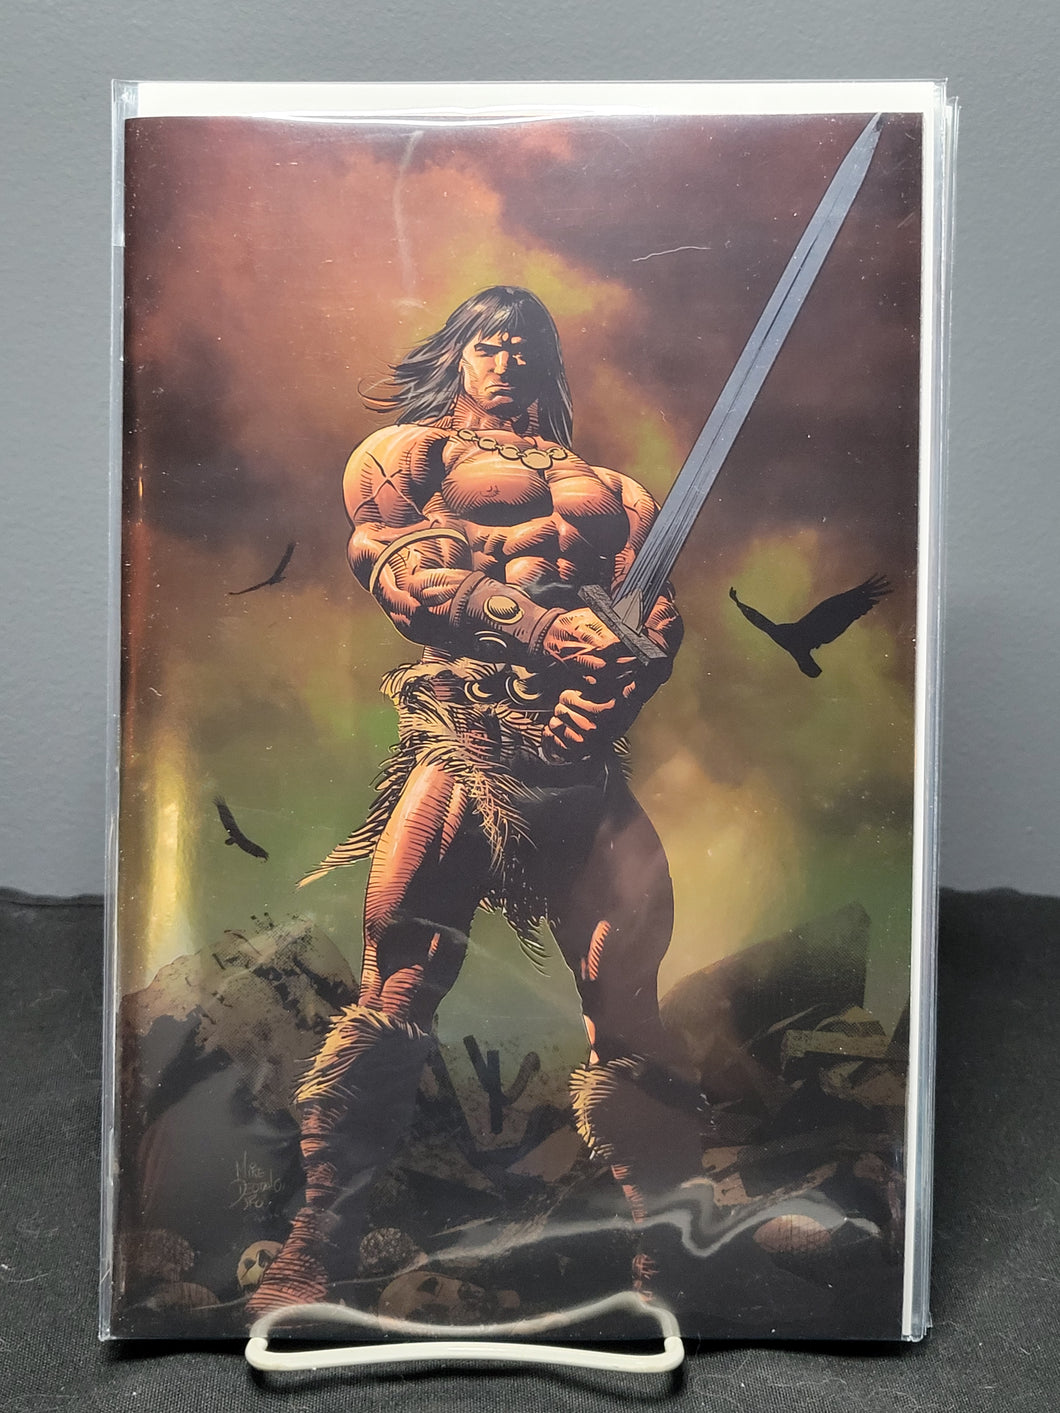 Conan The Barbarian #5 LCSD Foil Variant